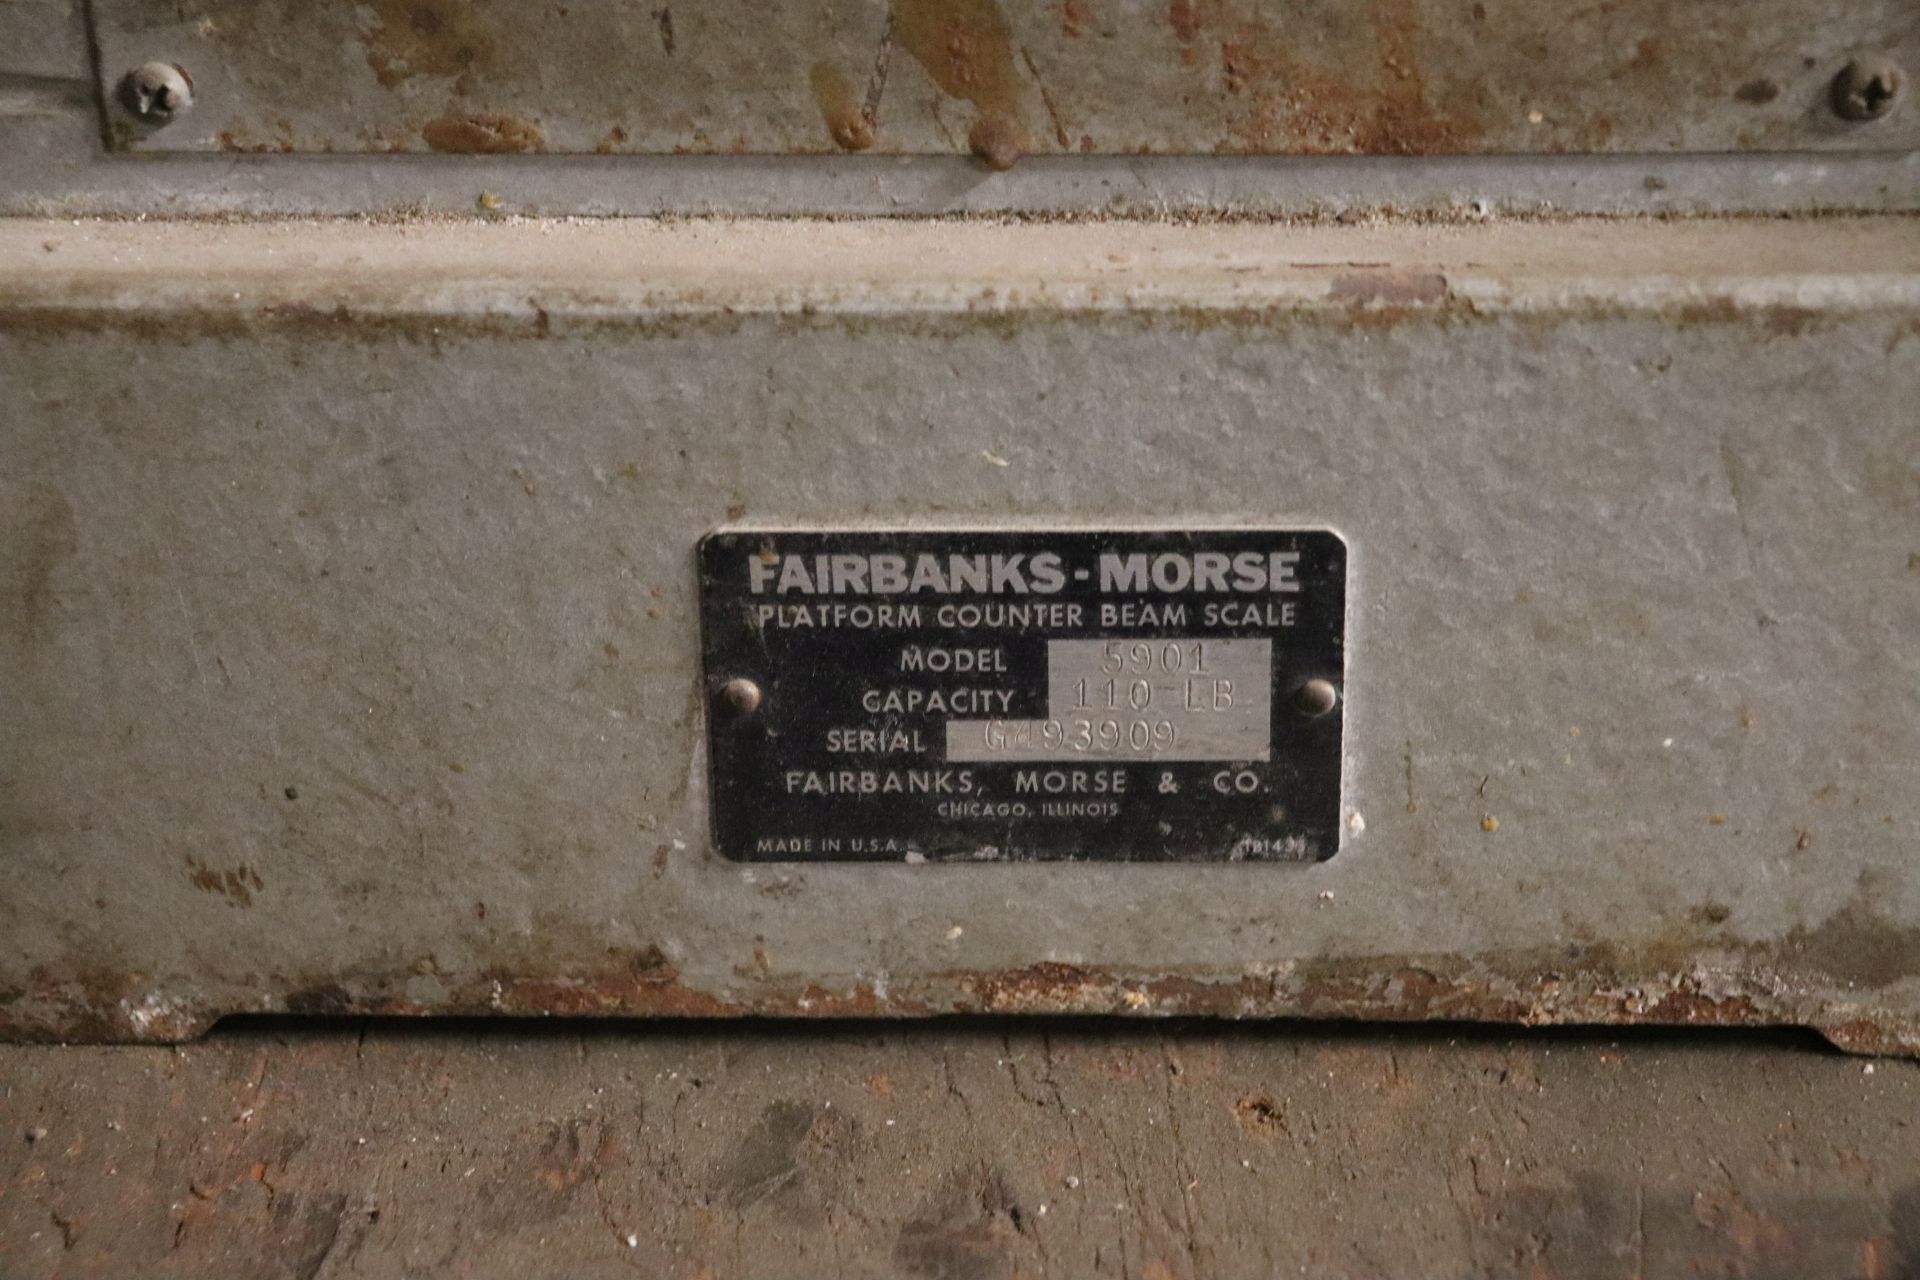 Fairbanks platform counter beam scale, model 5901 - Image 2 of 2